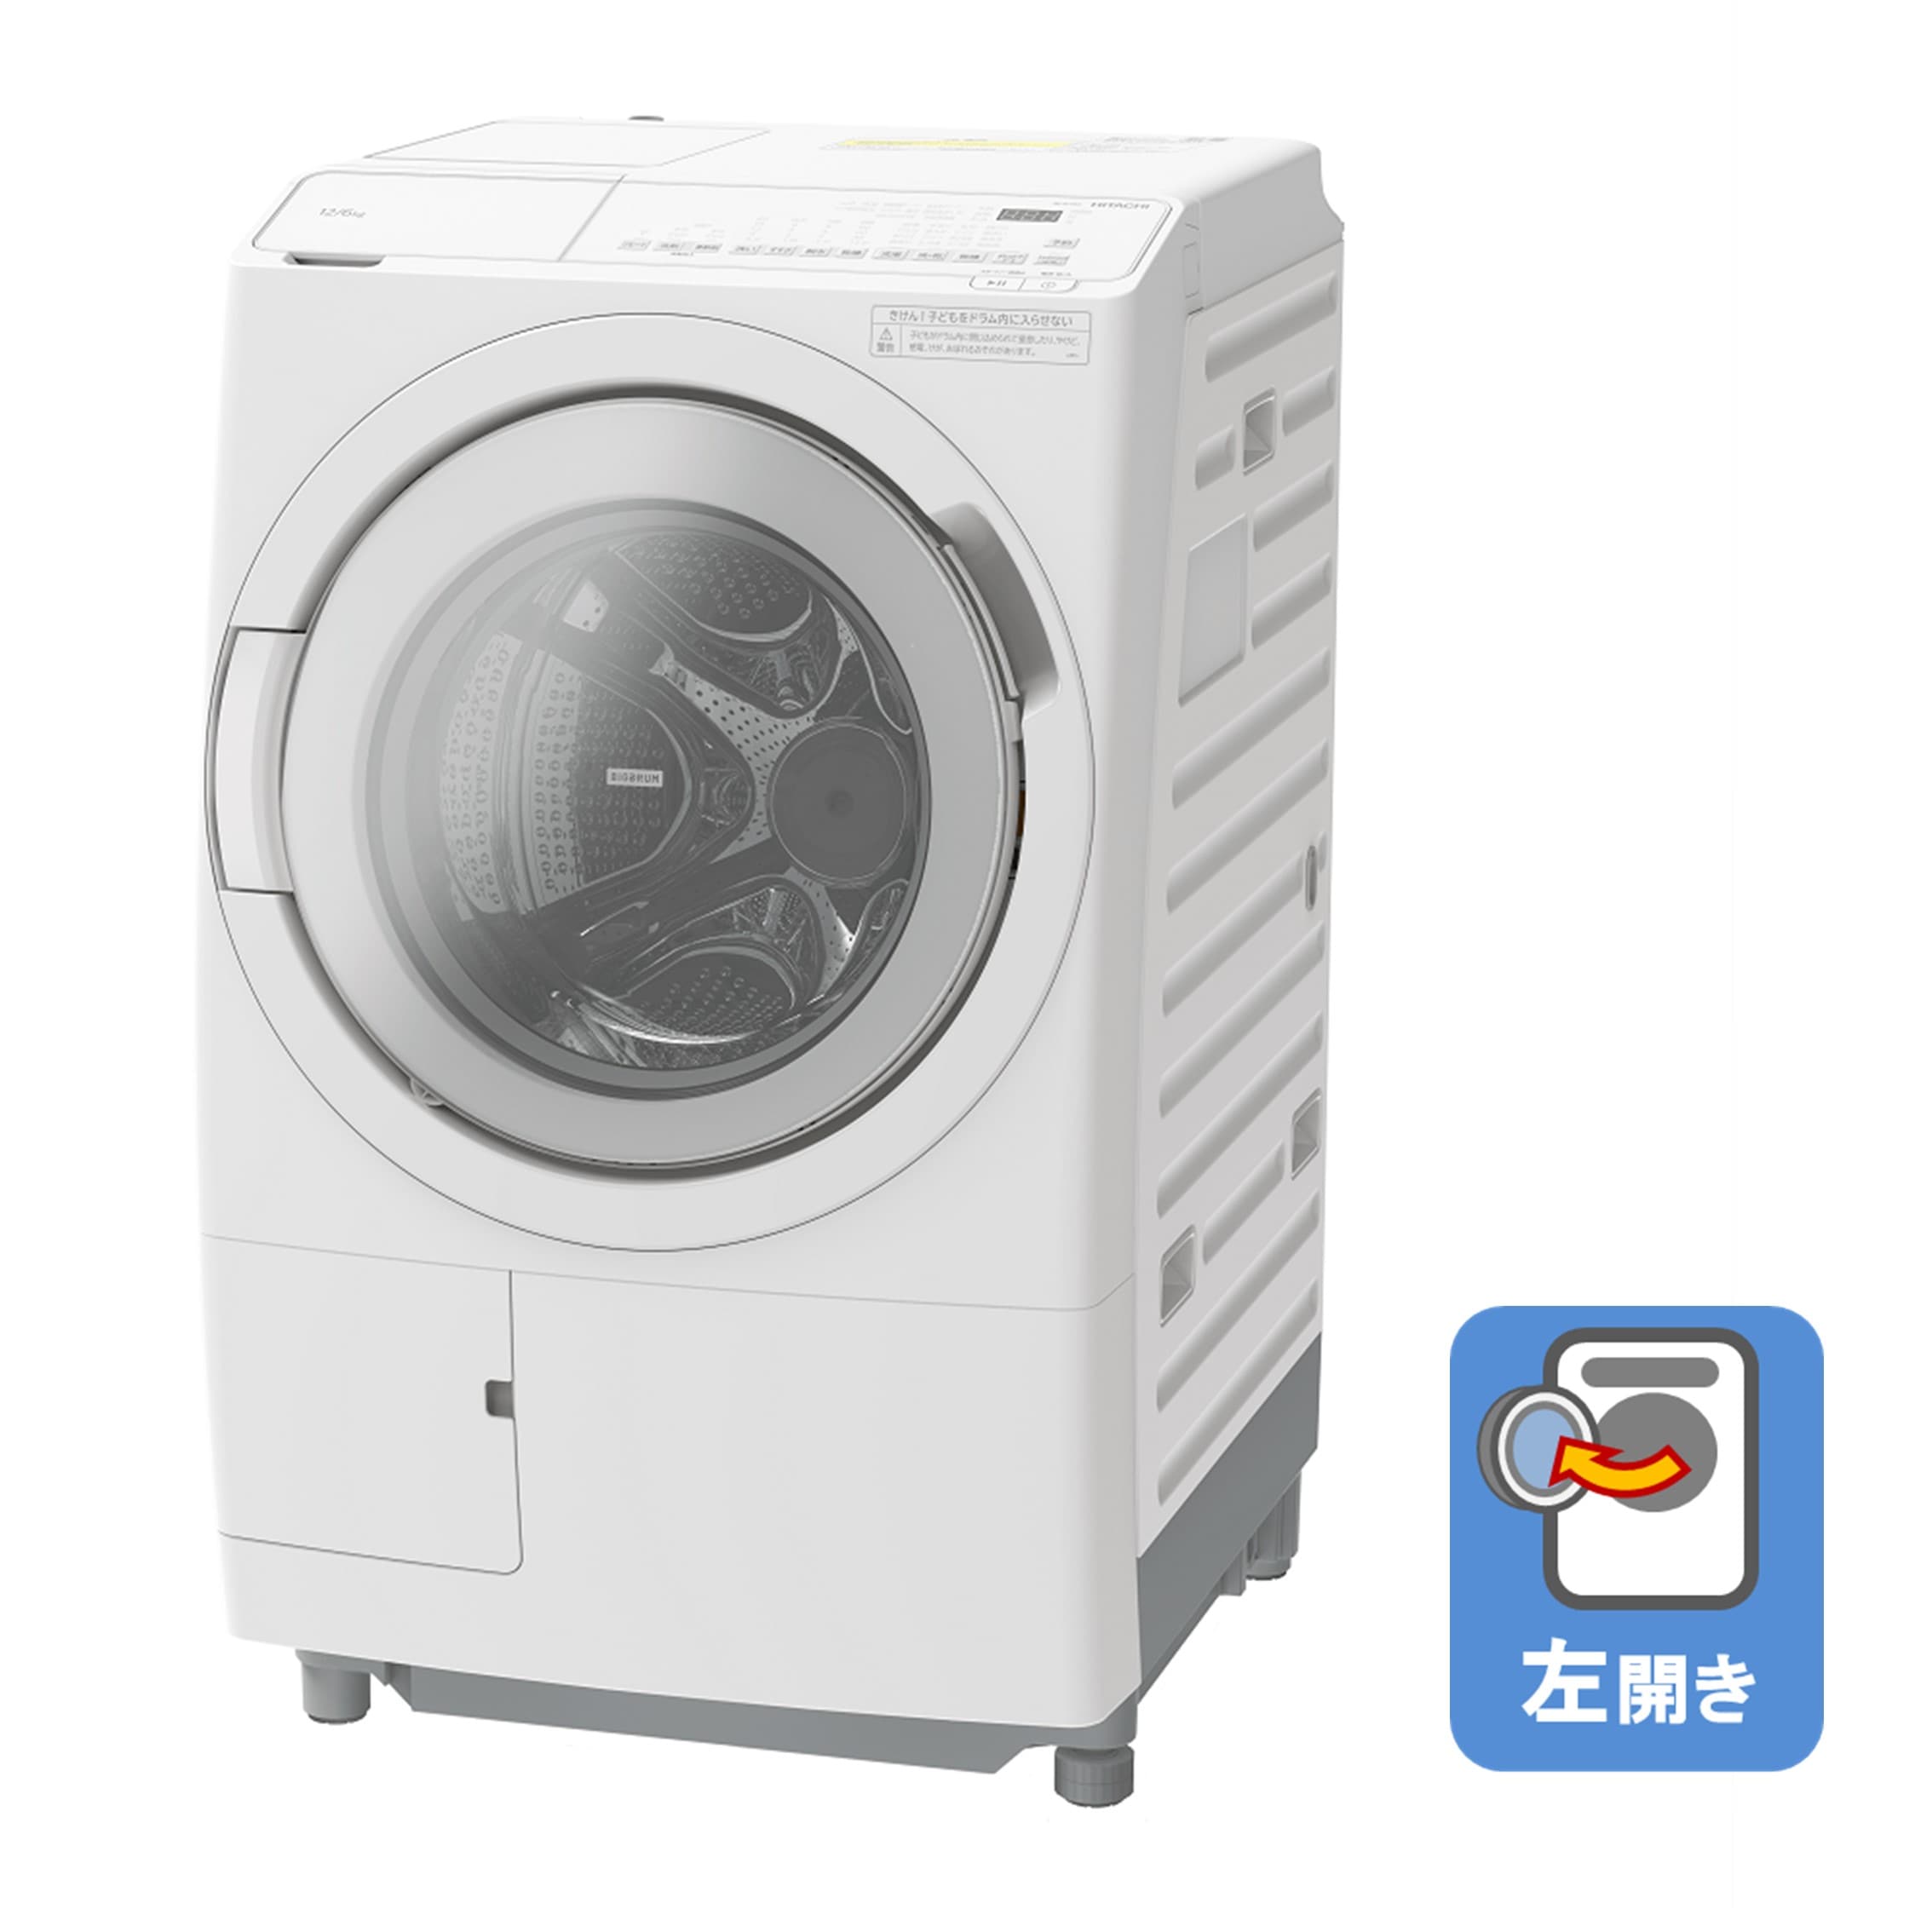 BW-V70Bたのめる便送料無料 HITACHI 洗濯機 7.0kg 0605や1 H 240